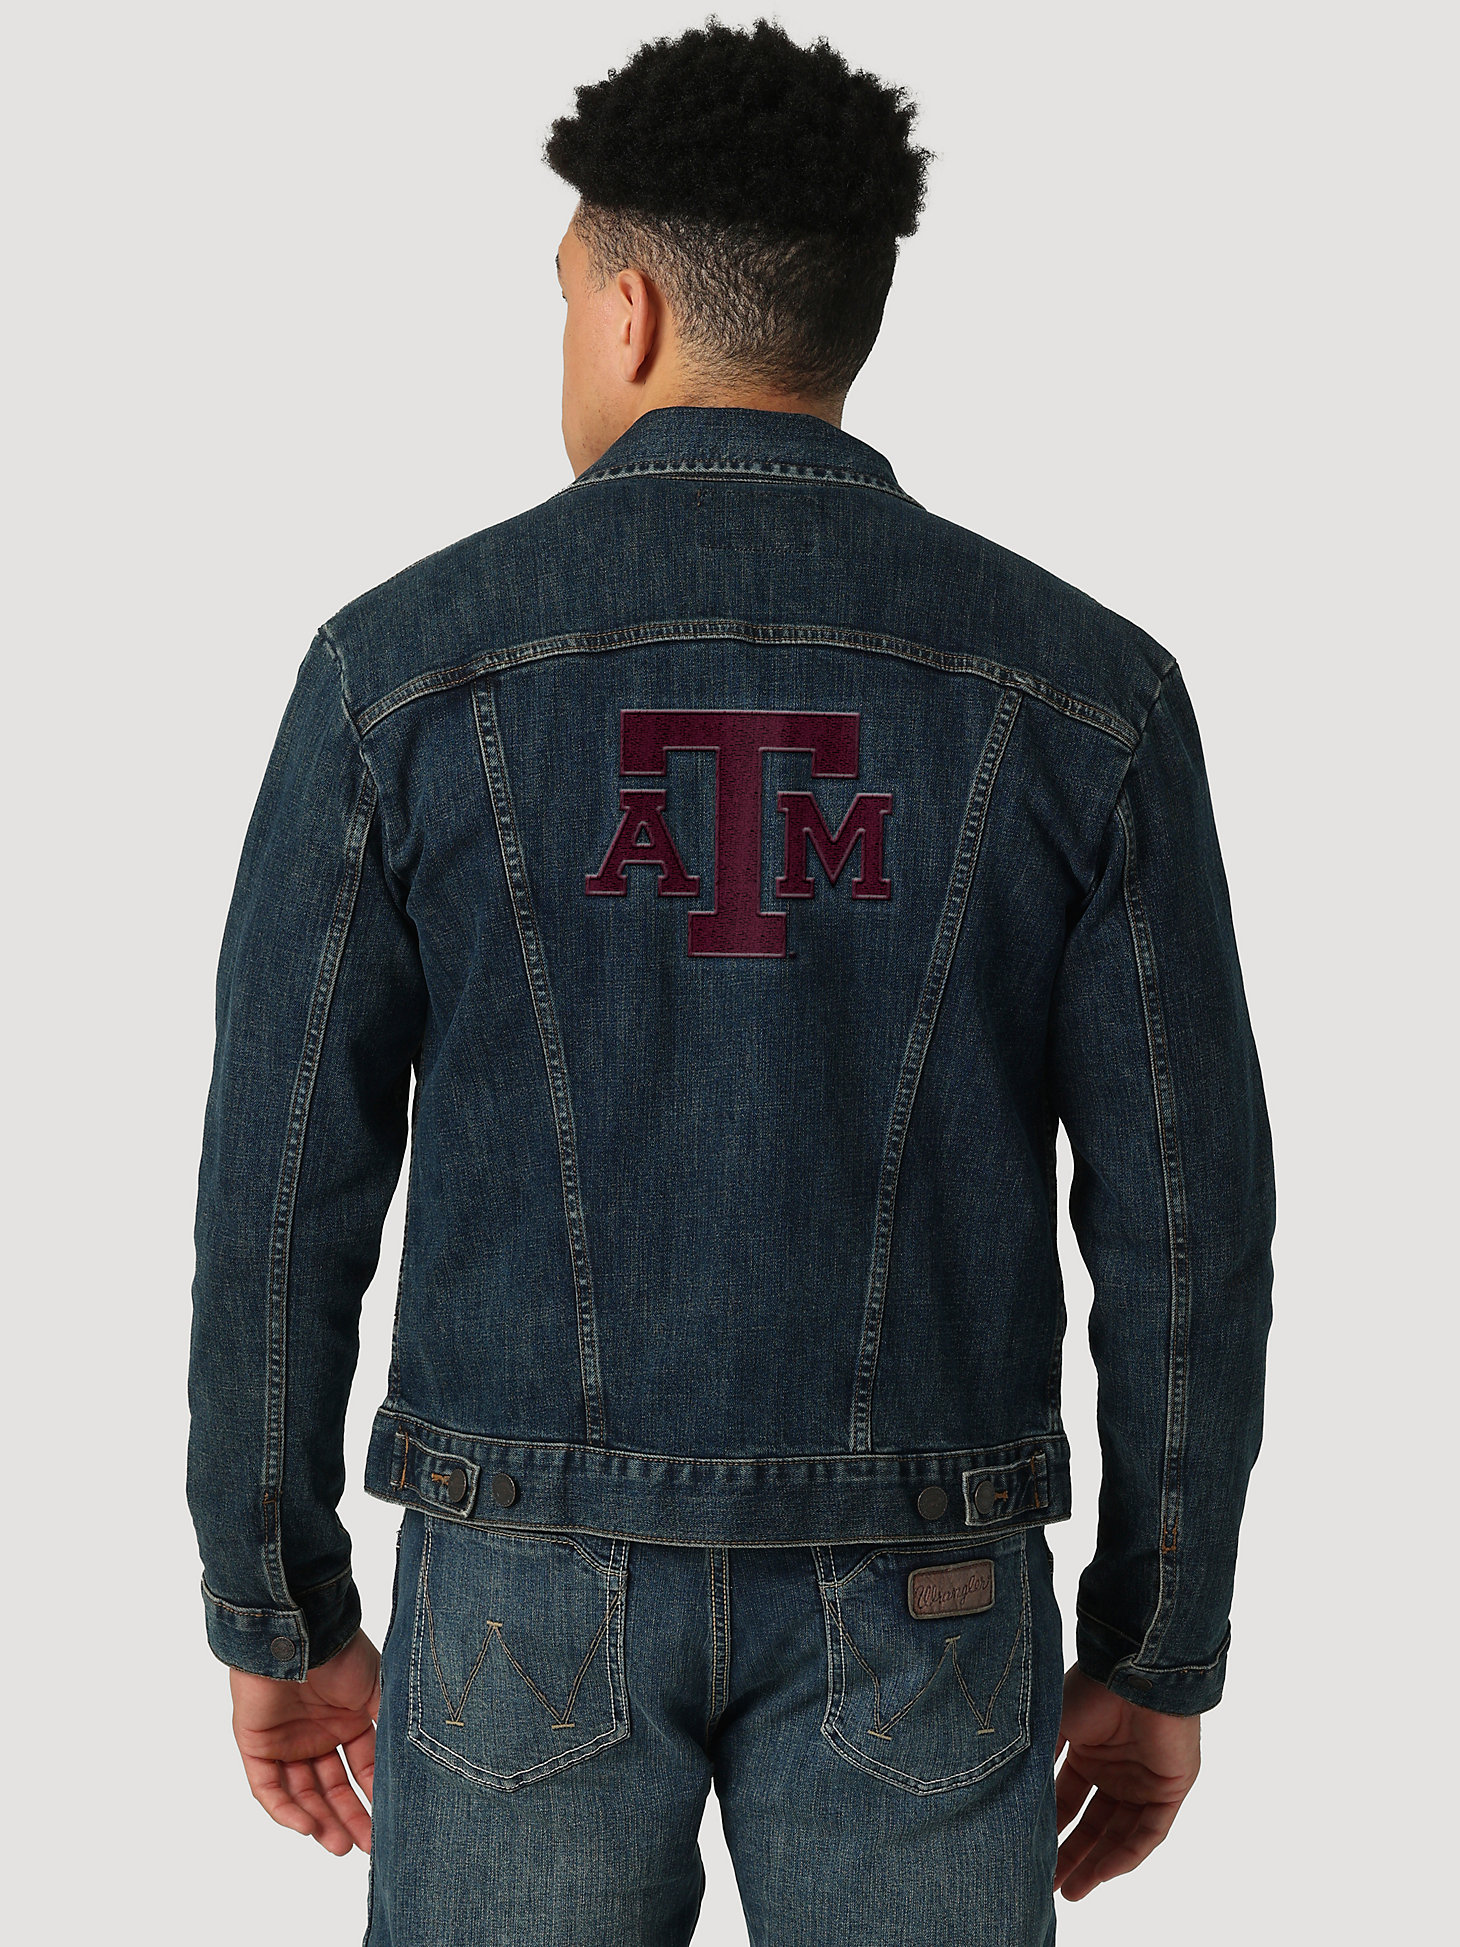 Men's Wrangler Retro Collegiate Embroidered Denim Jacket in Texas A&M alternative view 1